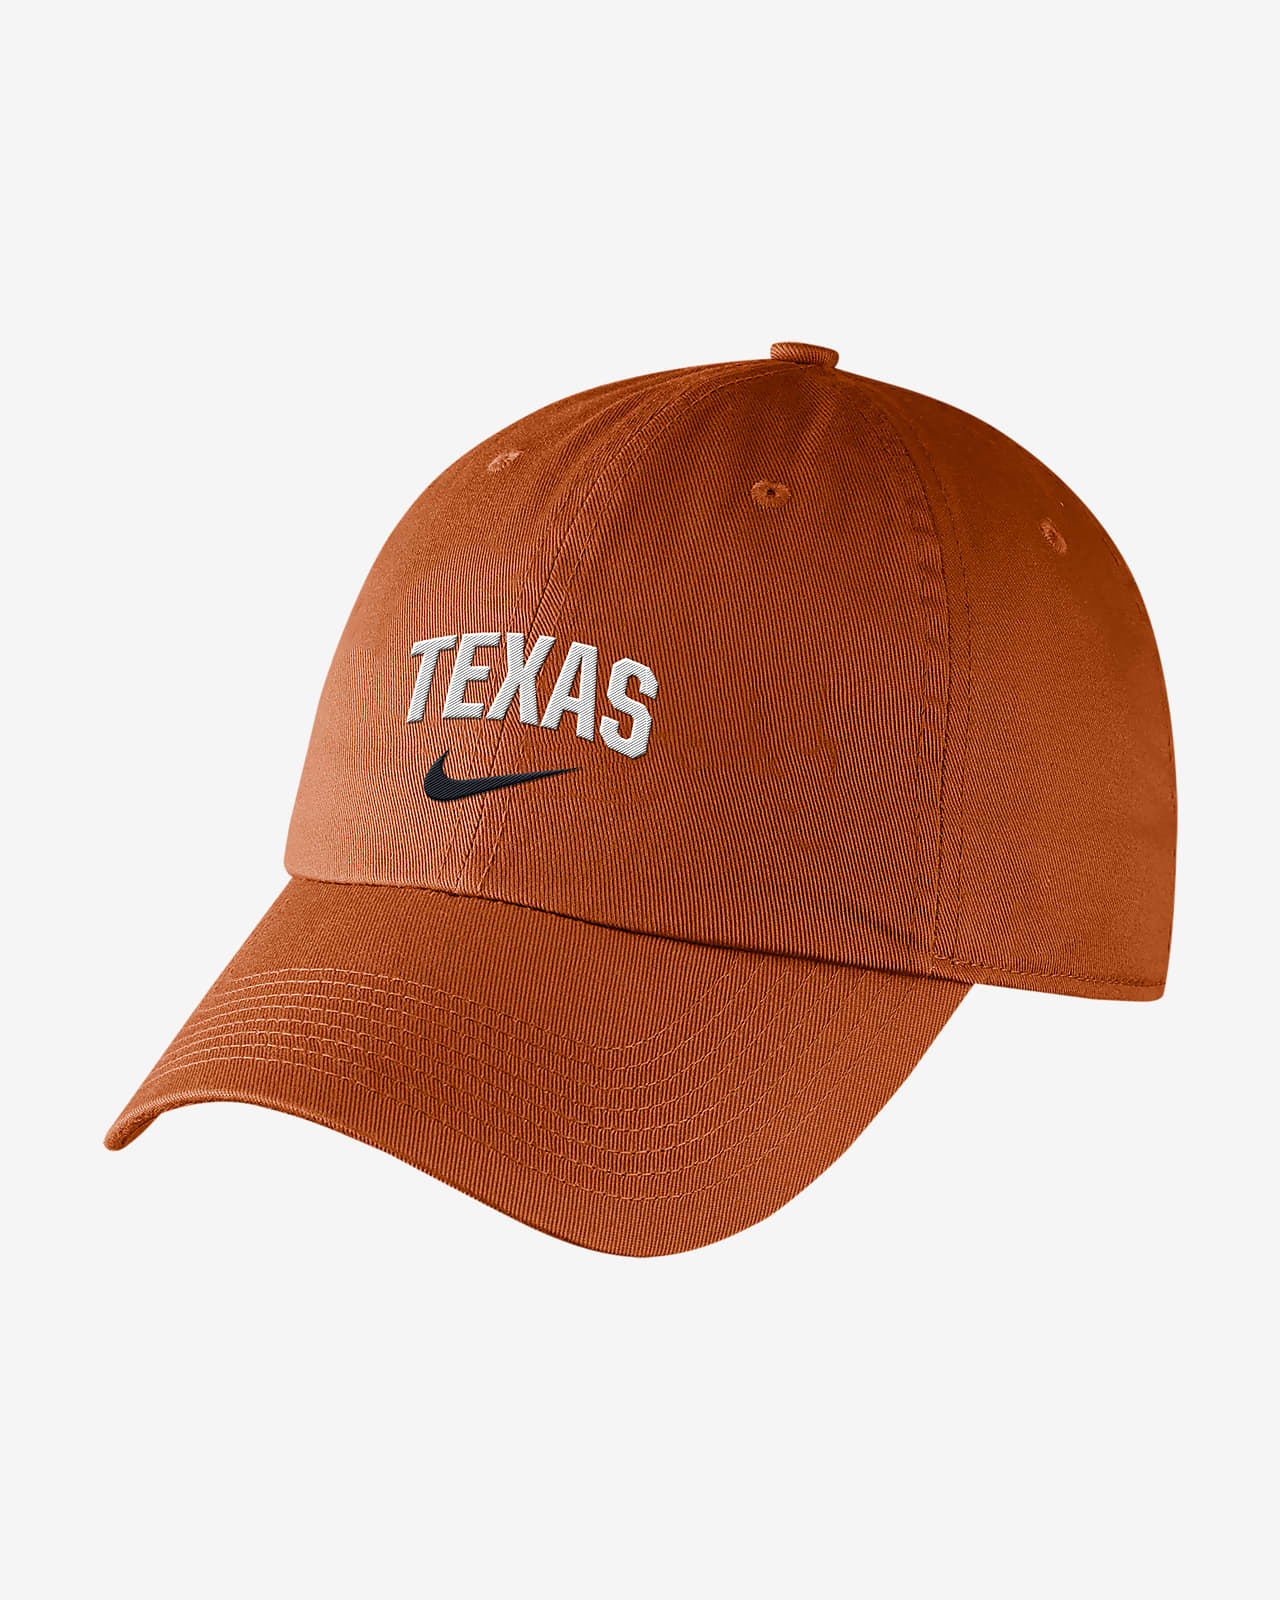 Nike College (Texas) Hat